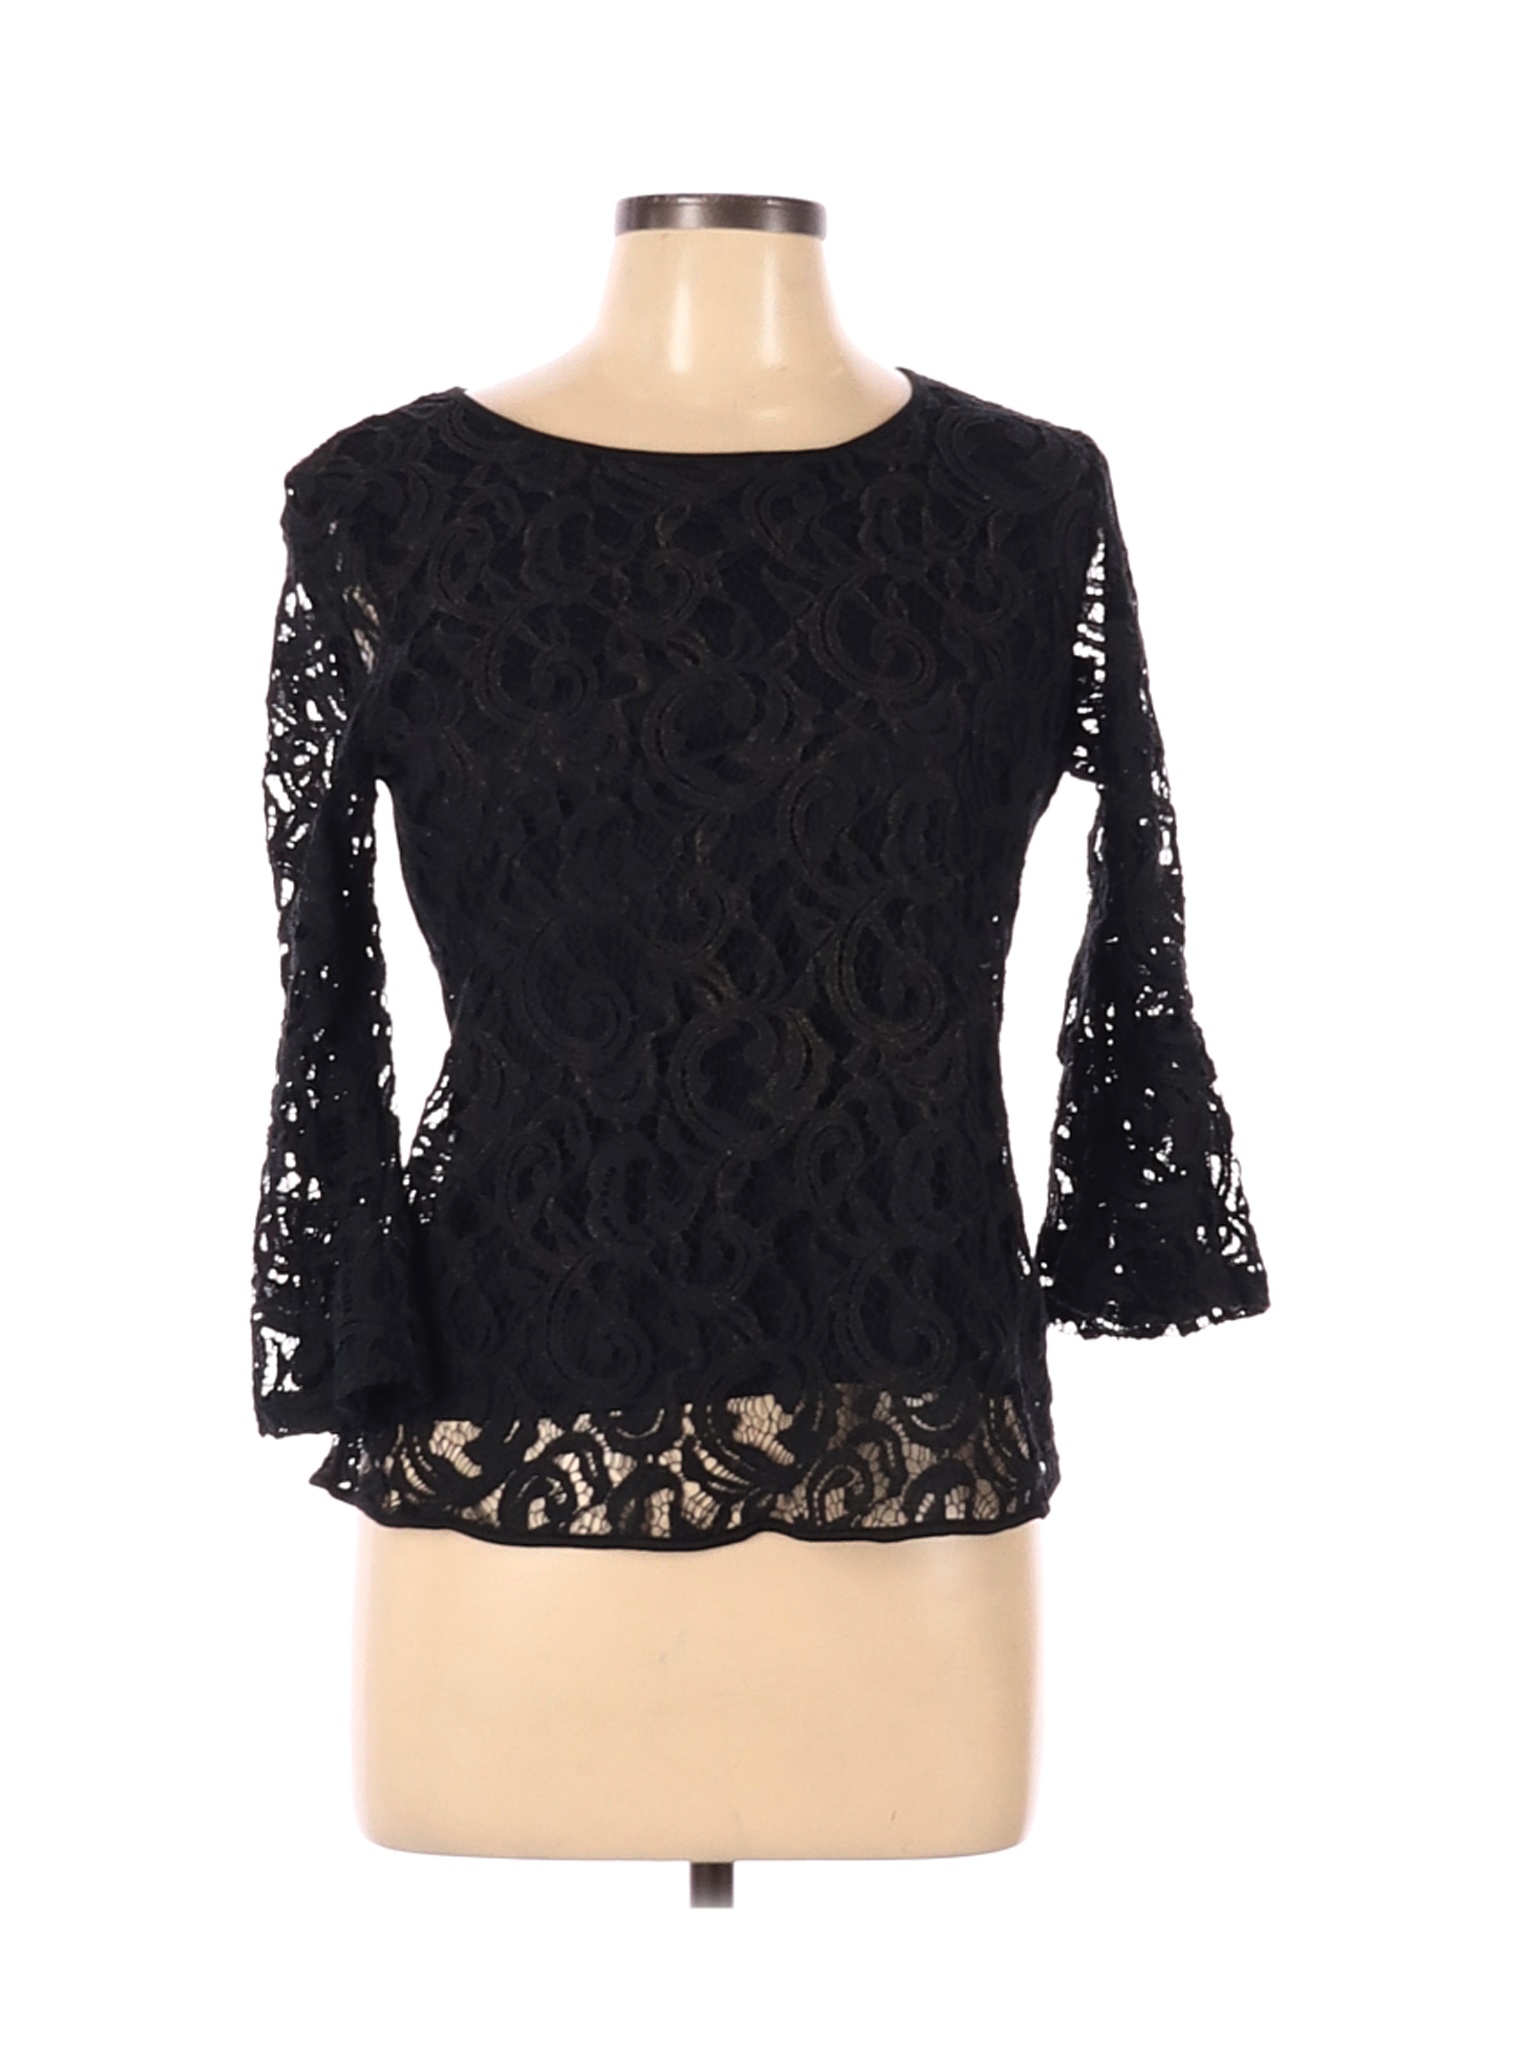 Adrianna Papell Women Black 3/4 Sleeve Blouse L | eBay